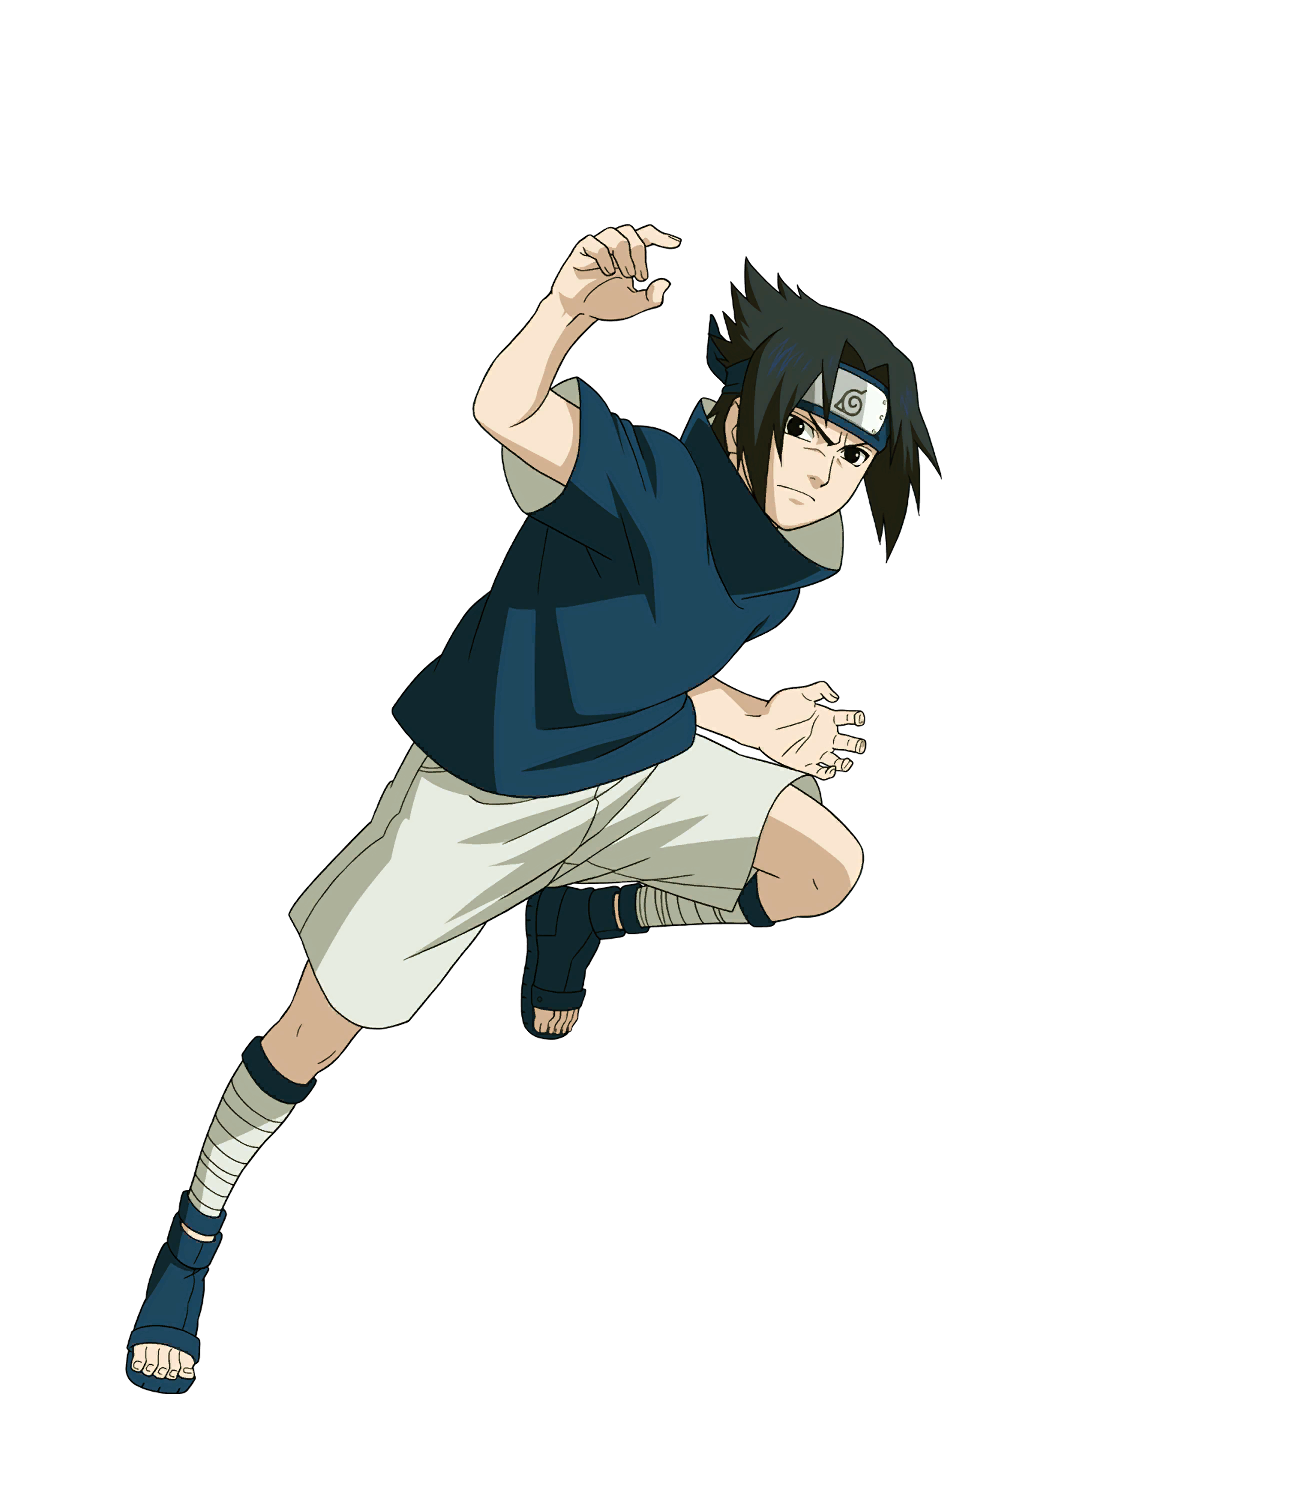 sasuke outfit changes